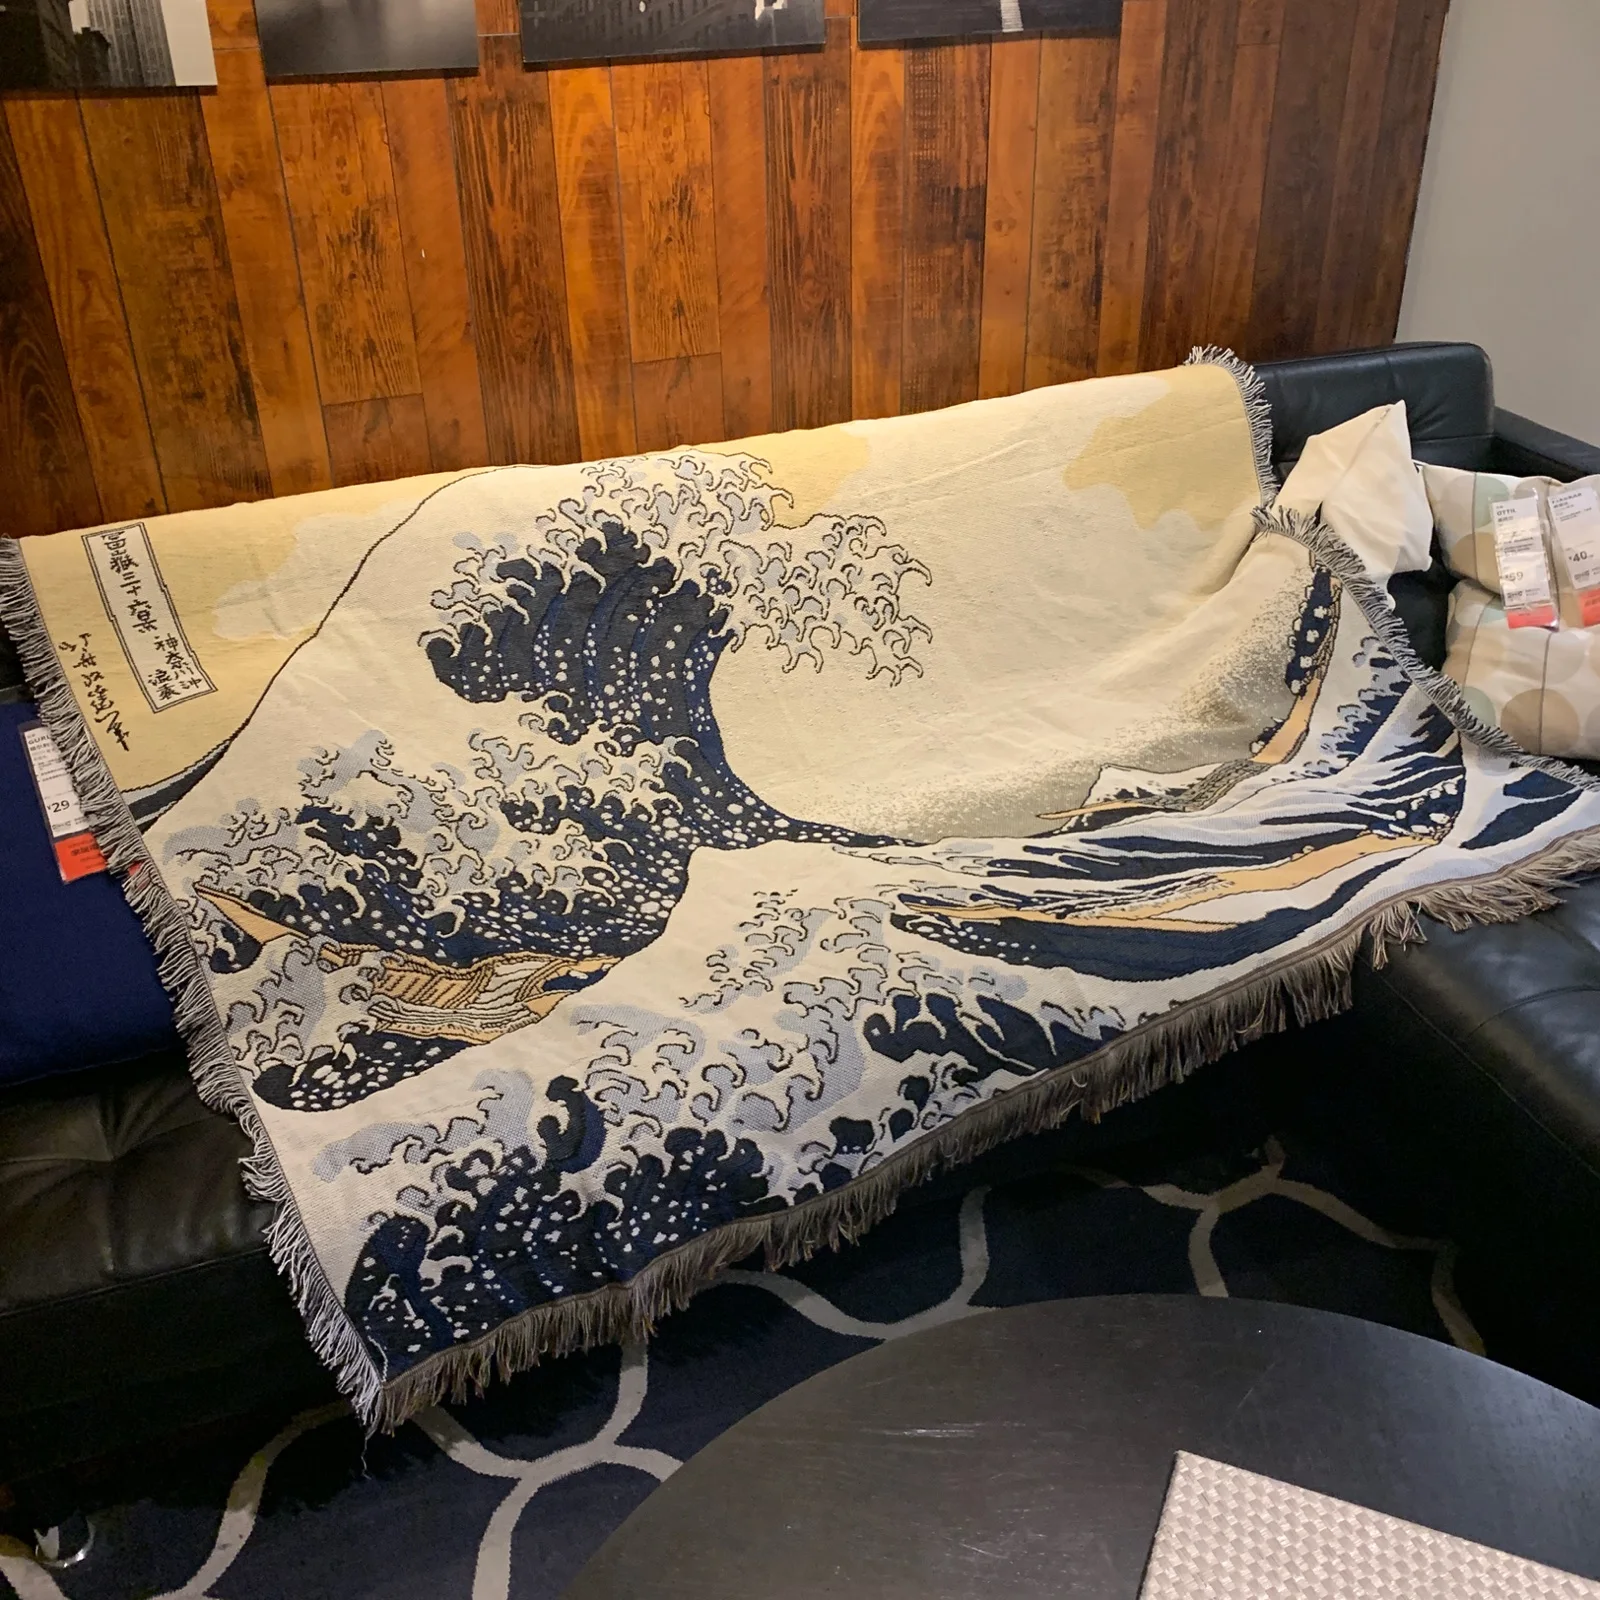 The Great Wave off Kanagawa Japanese Style Ukiyo-E Landscape Art Sofa Cover Blanket Decorative Blanket Picnic Blanket